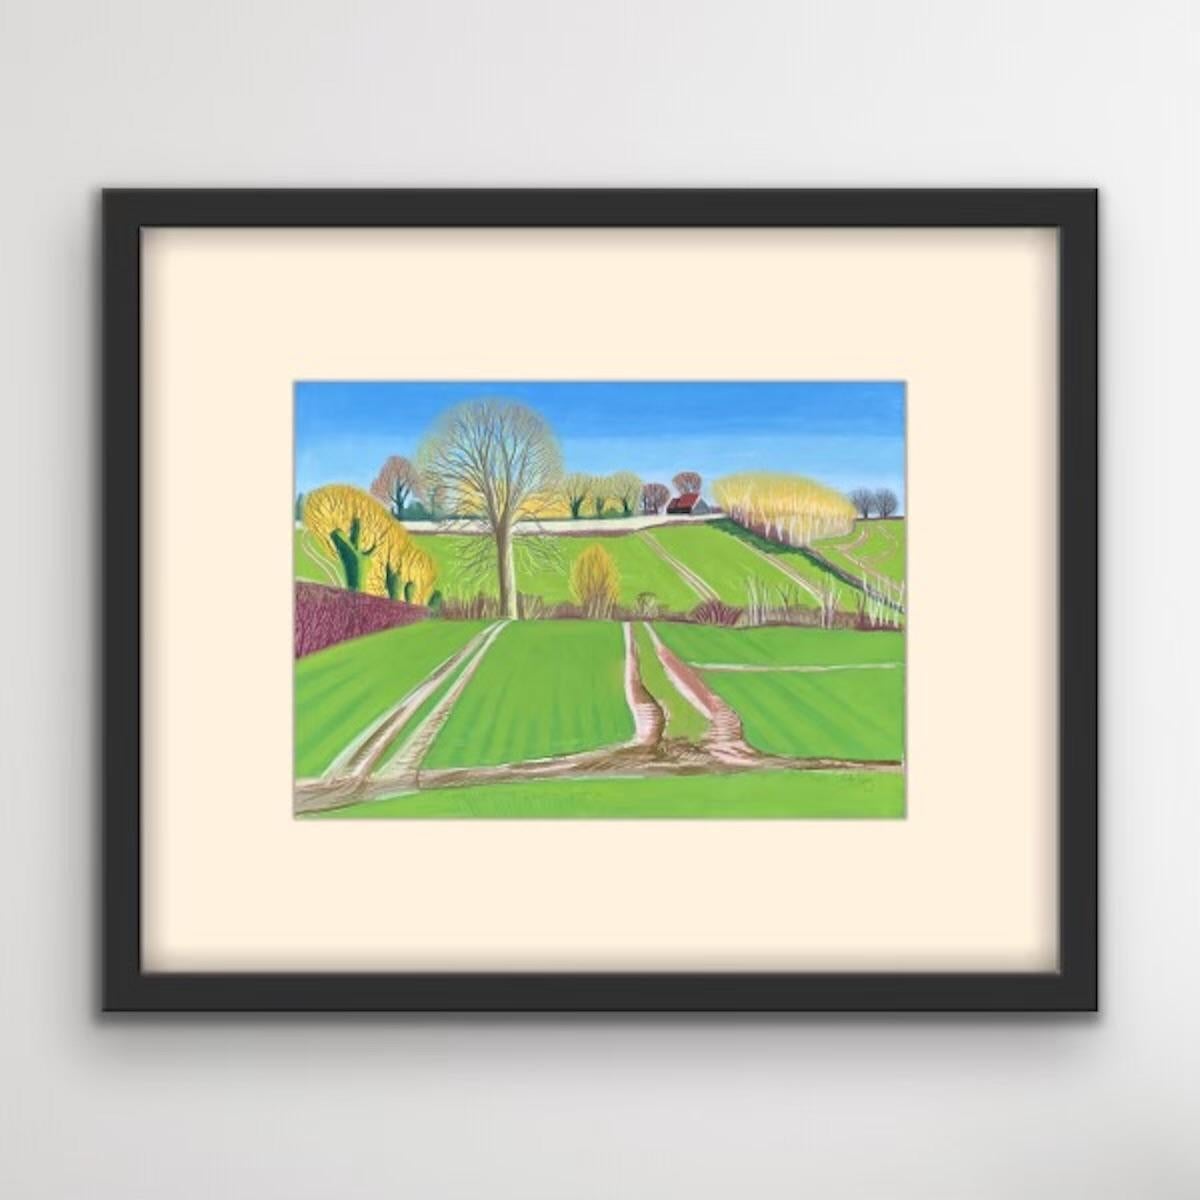 Deddington - Barn Towards pipes de Cornelia Fitzroy, dessin de paysage, original - Contemporain Art par Cornelia Fitzroy 